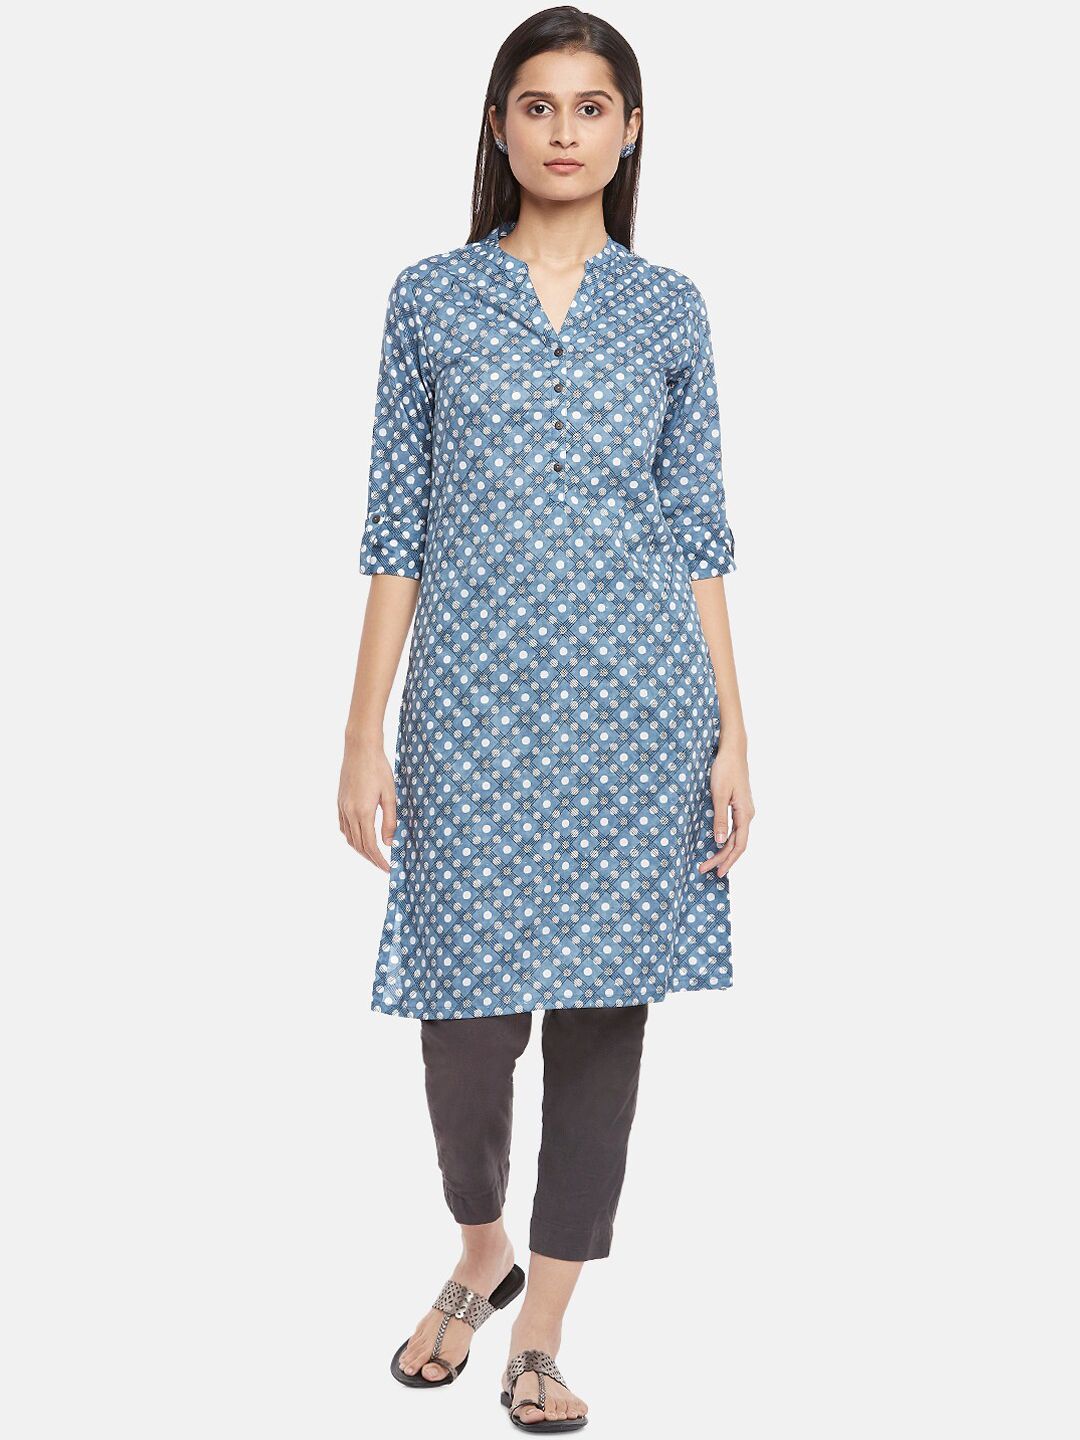 RANGMANCH BY PANTALOONS Women Blue & White Geometric Printed Pure Cotton Kurta Price in India